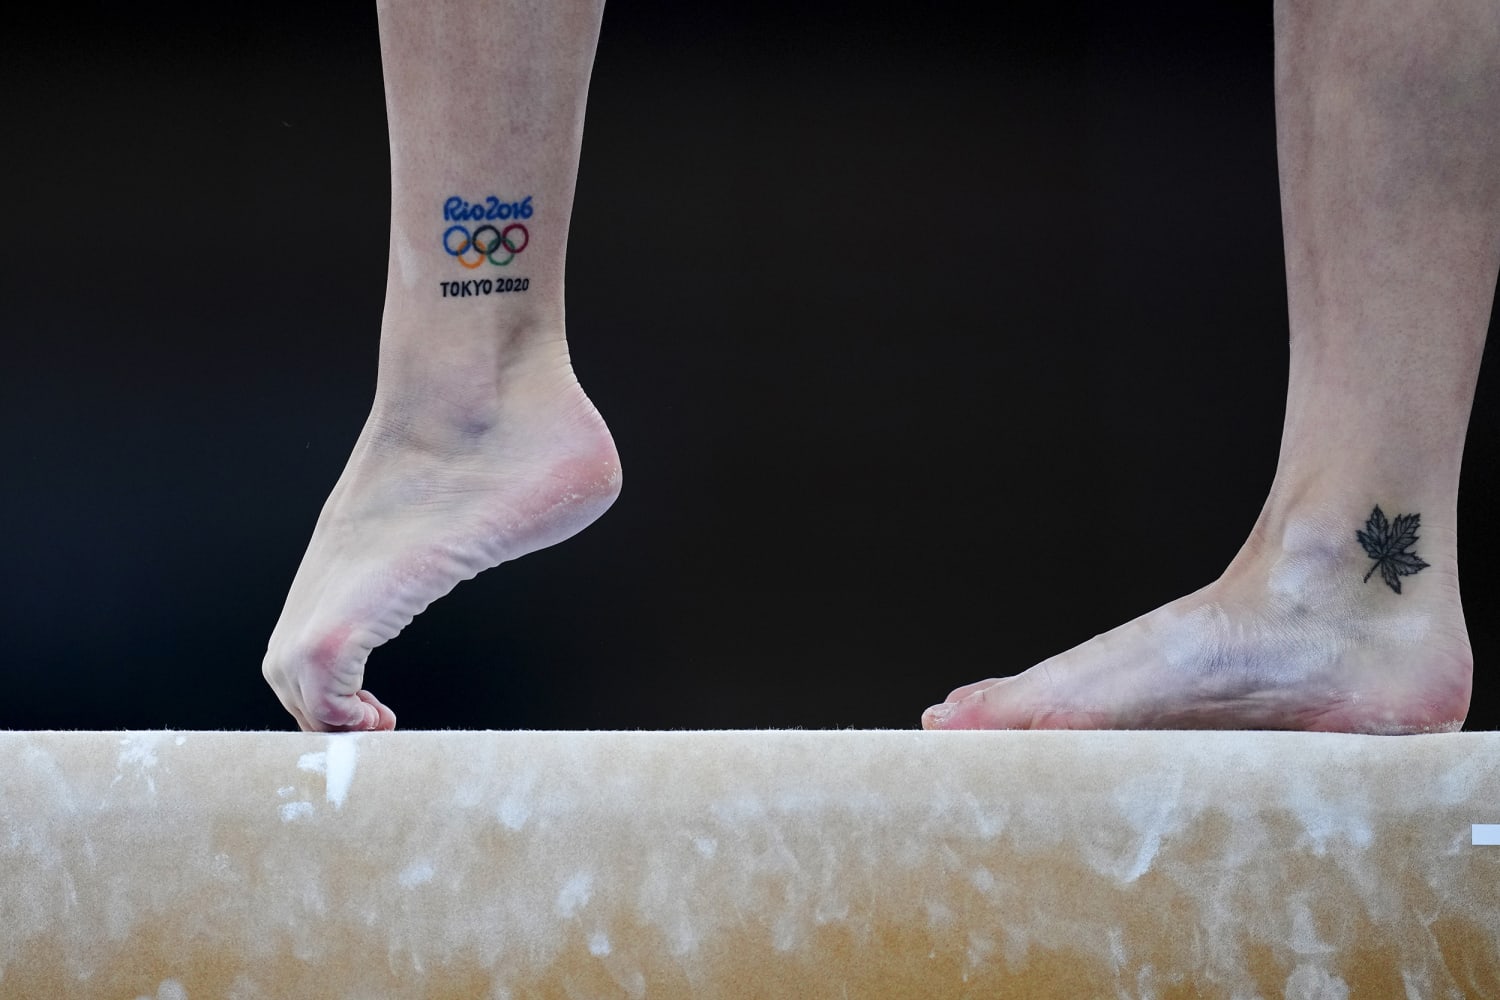 Tattoos at the 2016 Rio Summer Olympics